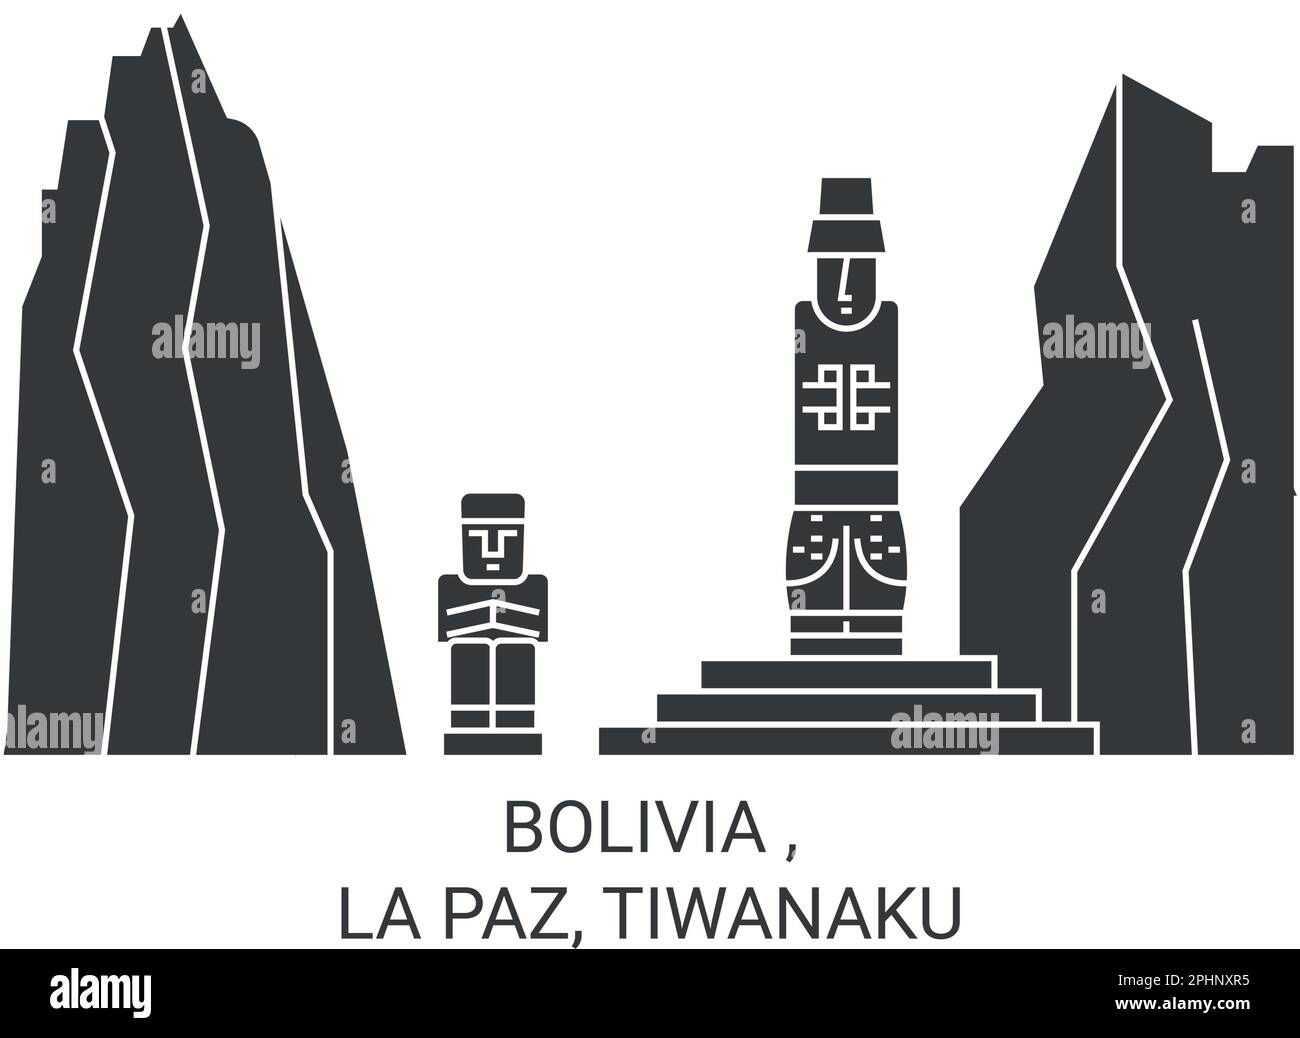 Bolivia , La Paz, Tiwanaku travel landmark vector illustration Stock Vector